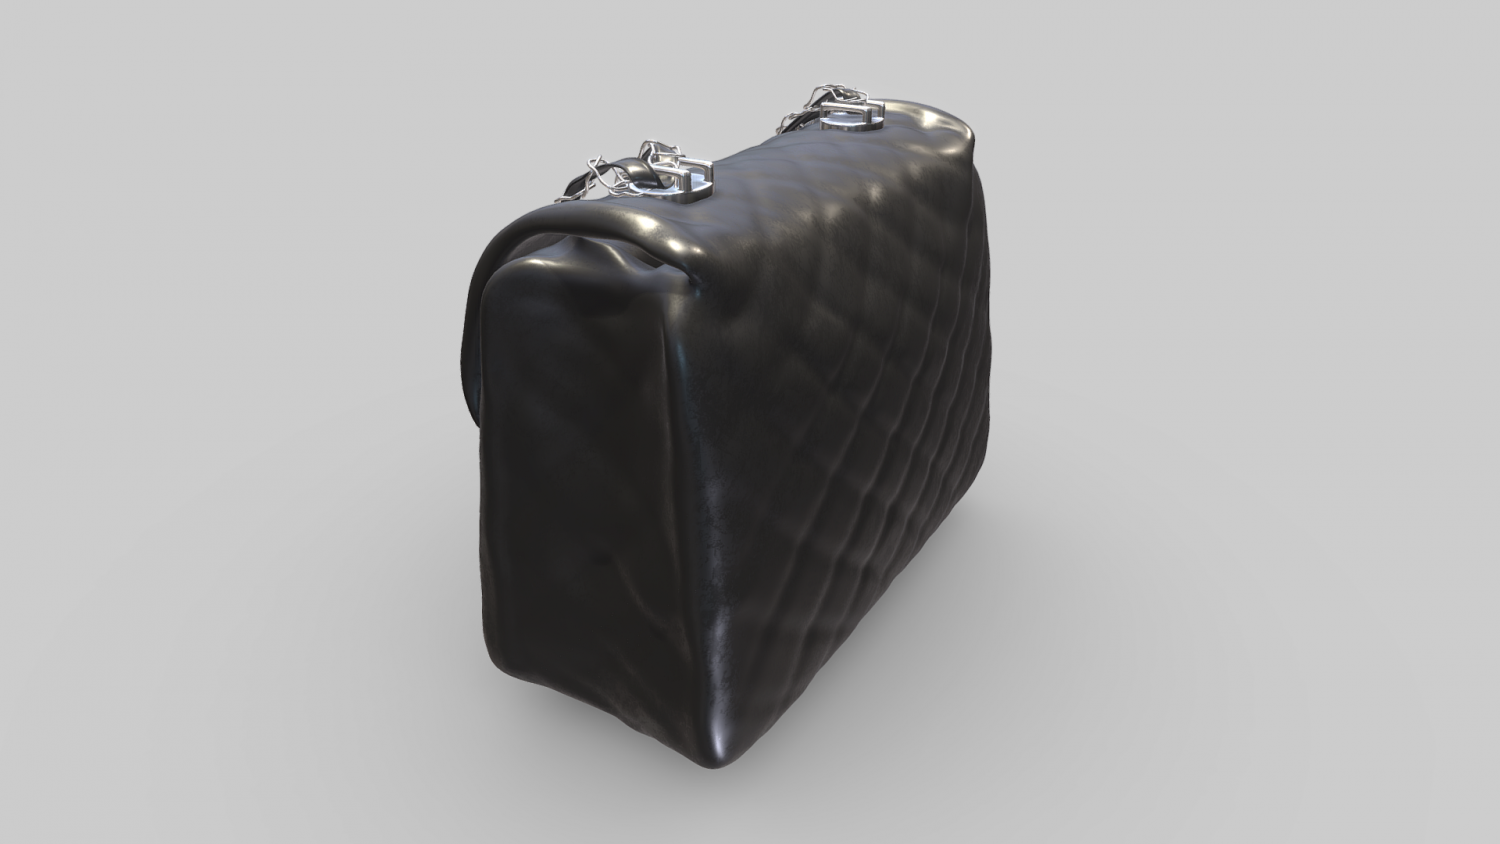 Chanel Leather Bag for Women 3D Model